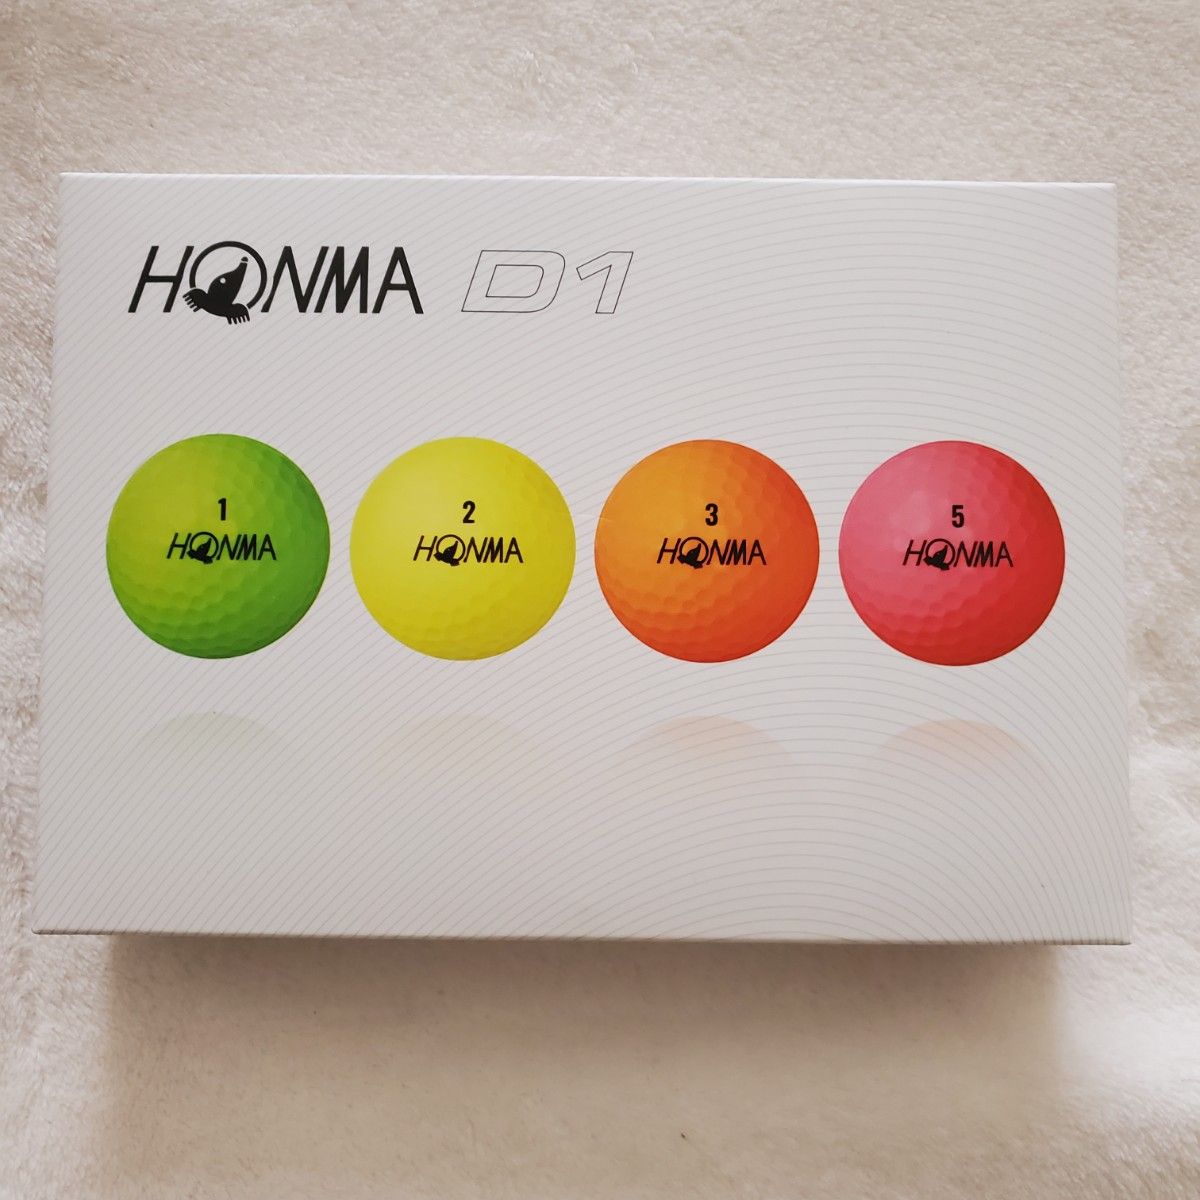 a 新品未使用 ゴルフボール 本間ゴルフ HONMA D1 (マルチカラー) 18球  ホンマD1 GOLFボール